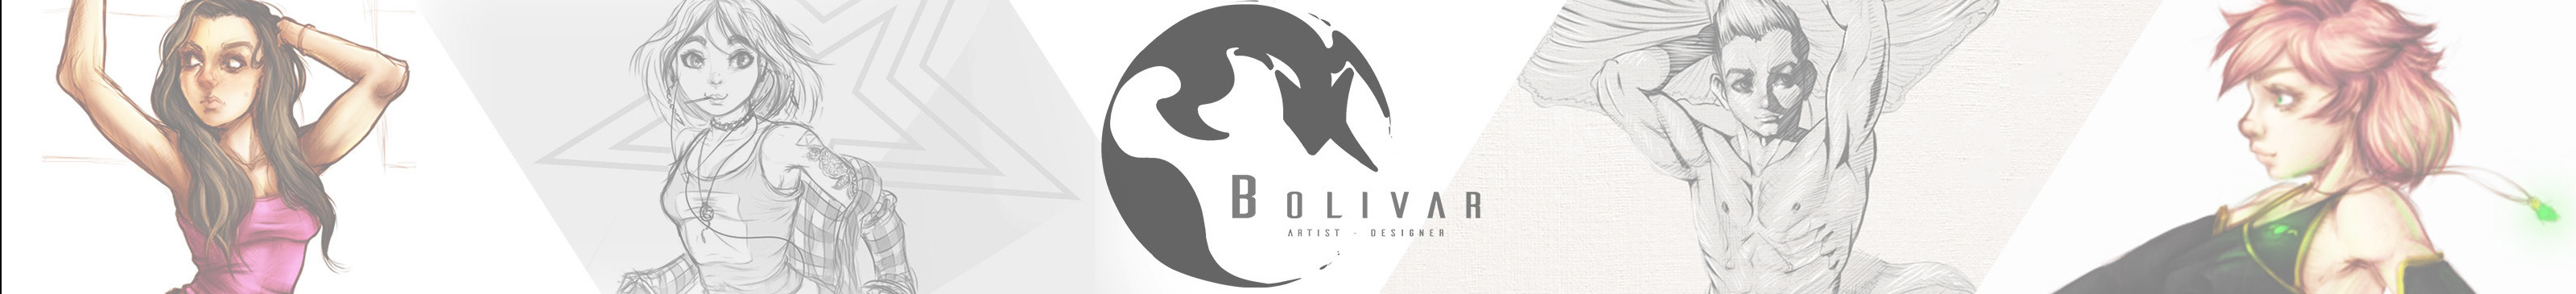 Michael Fuentes Bolivar's profile banner